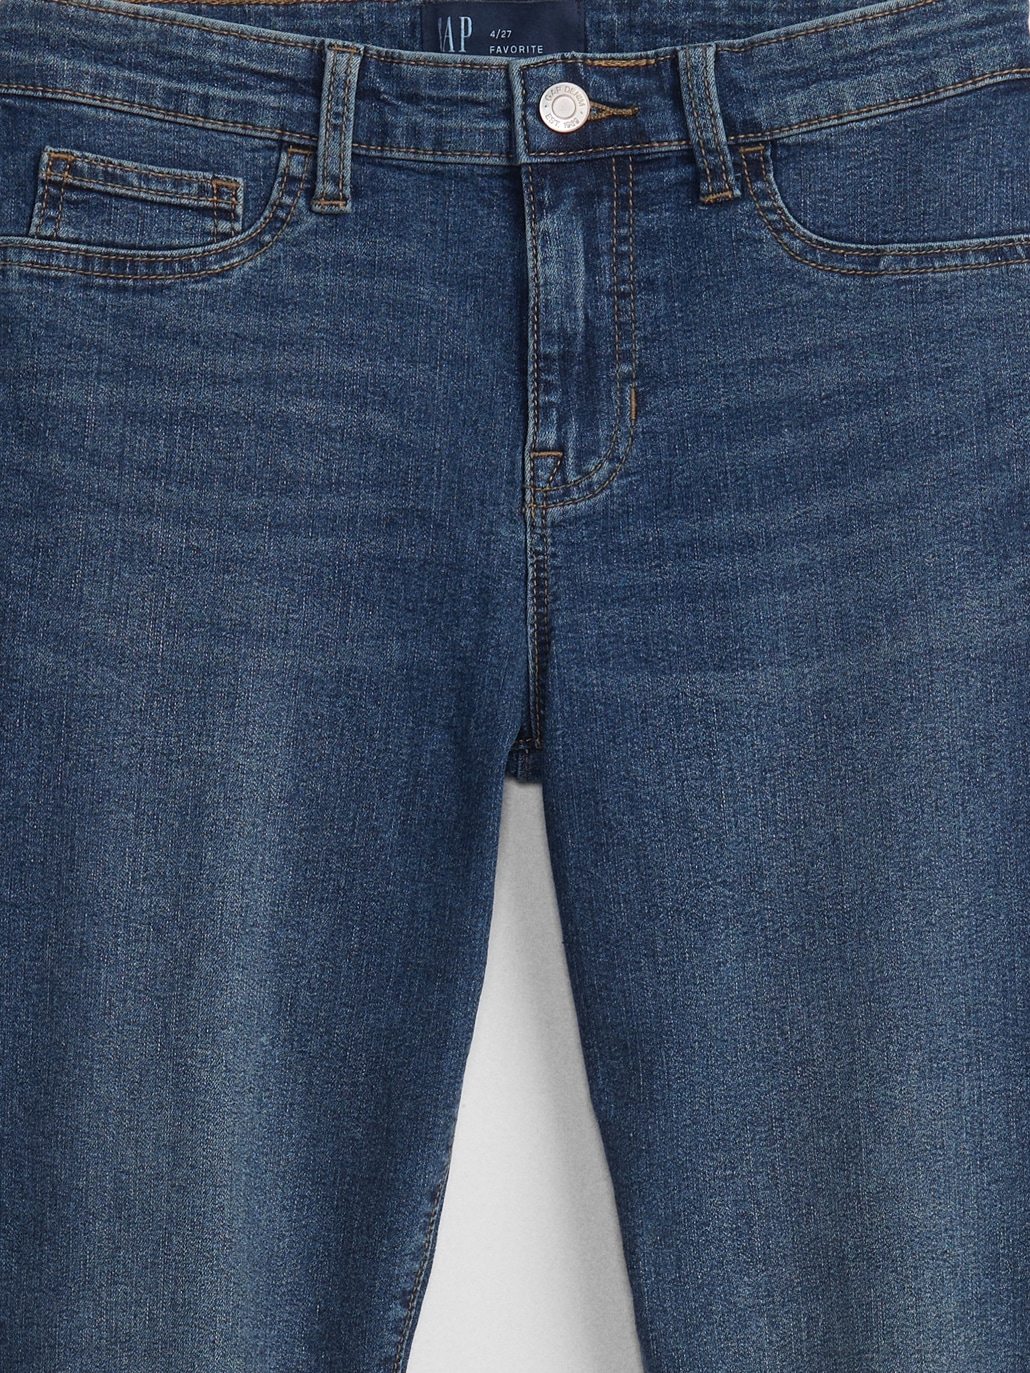 NWT Womens GAP Denim Legging Jeans Mid Rise Dark Indigo Jeggings Sculpted  *F6